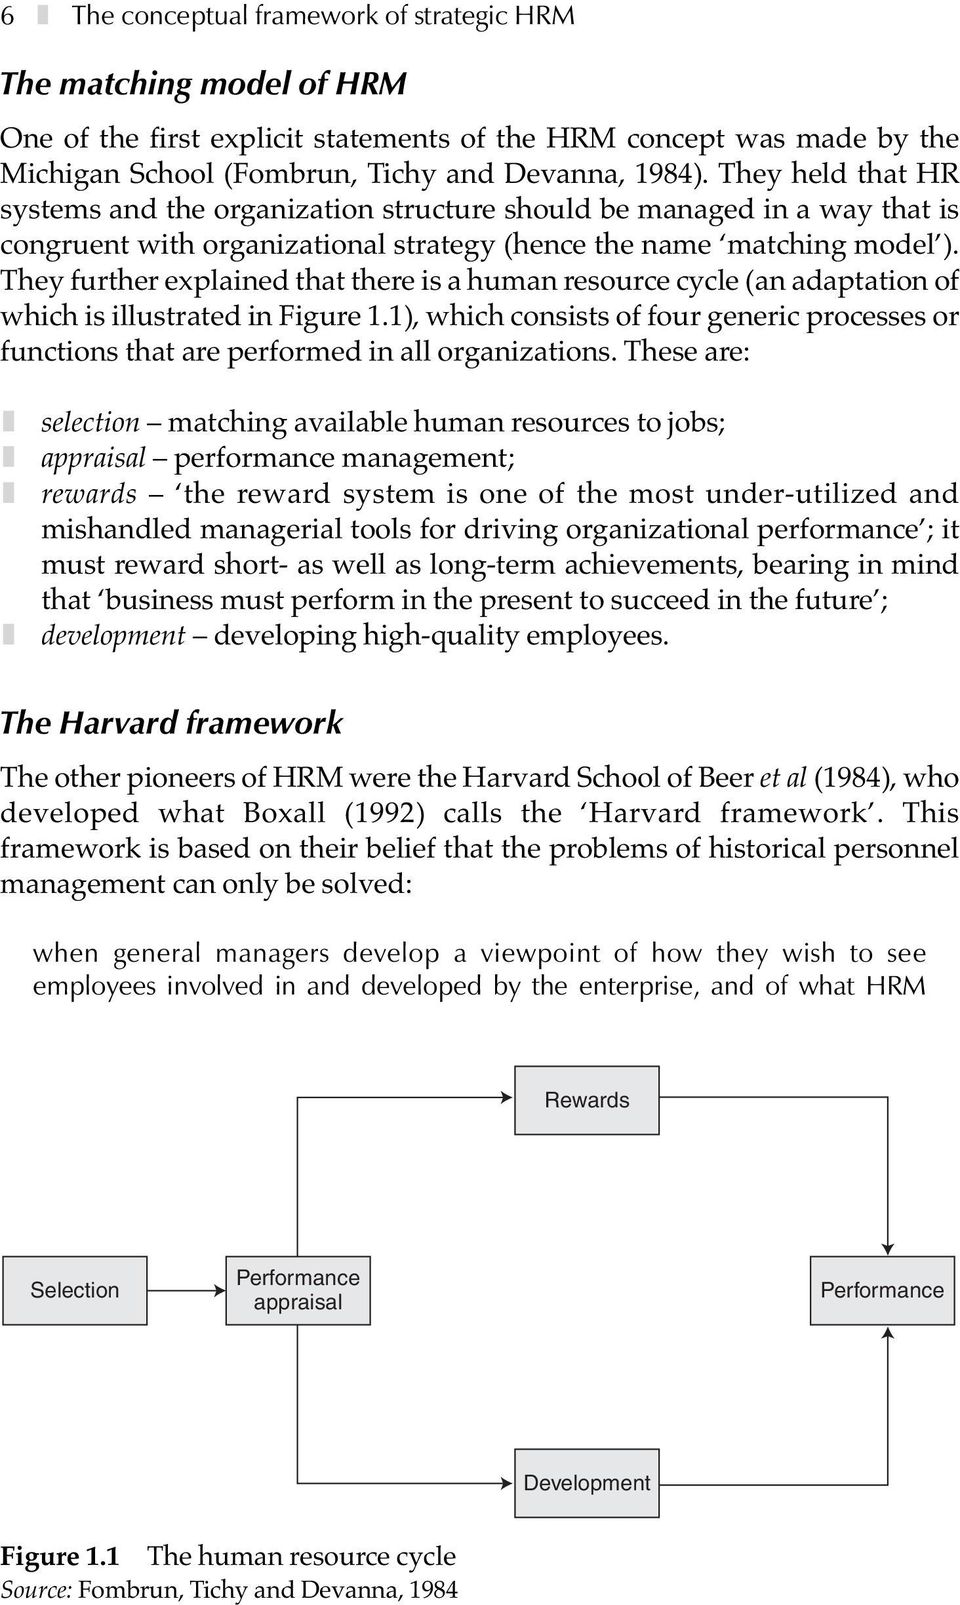 harvard framework for human resource management